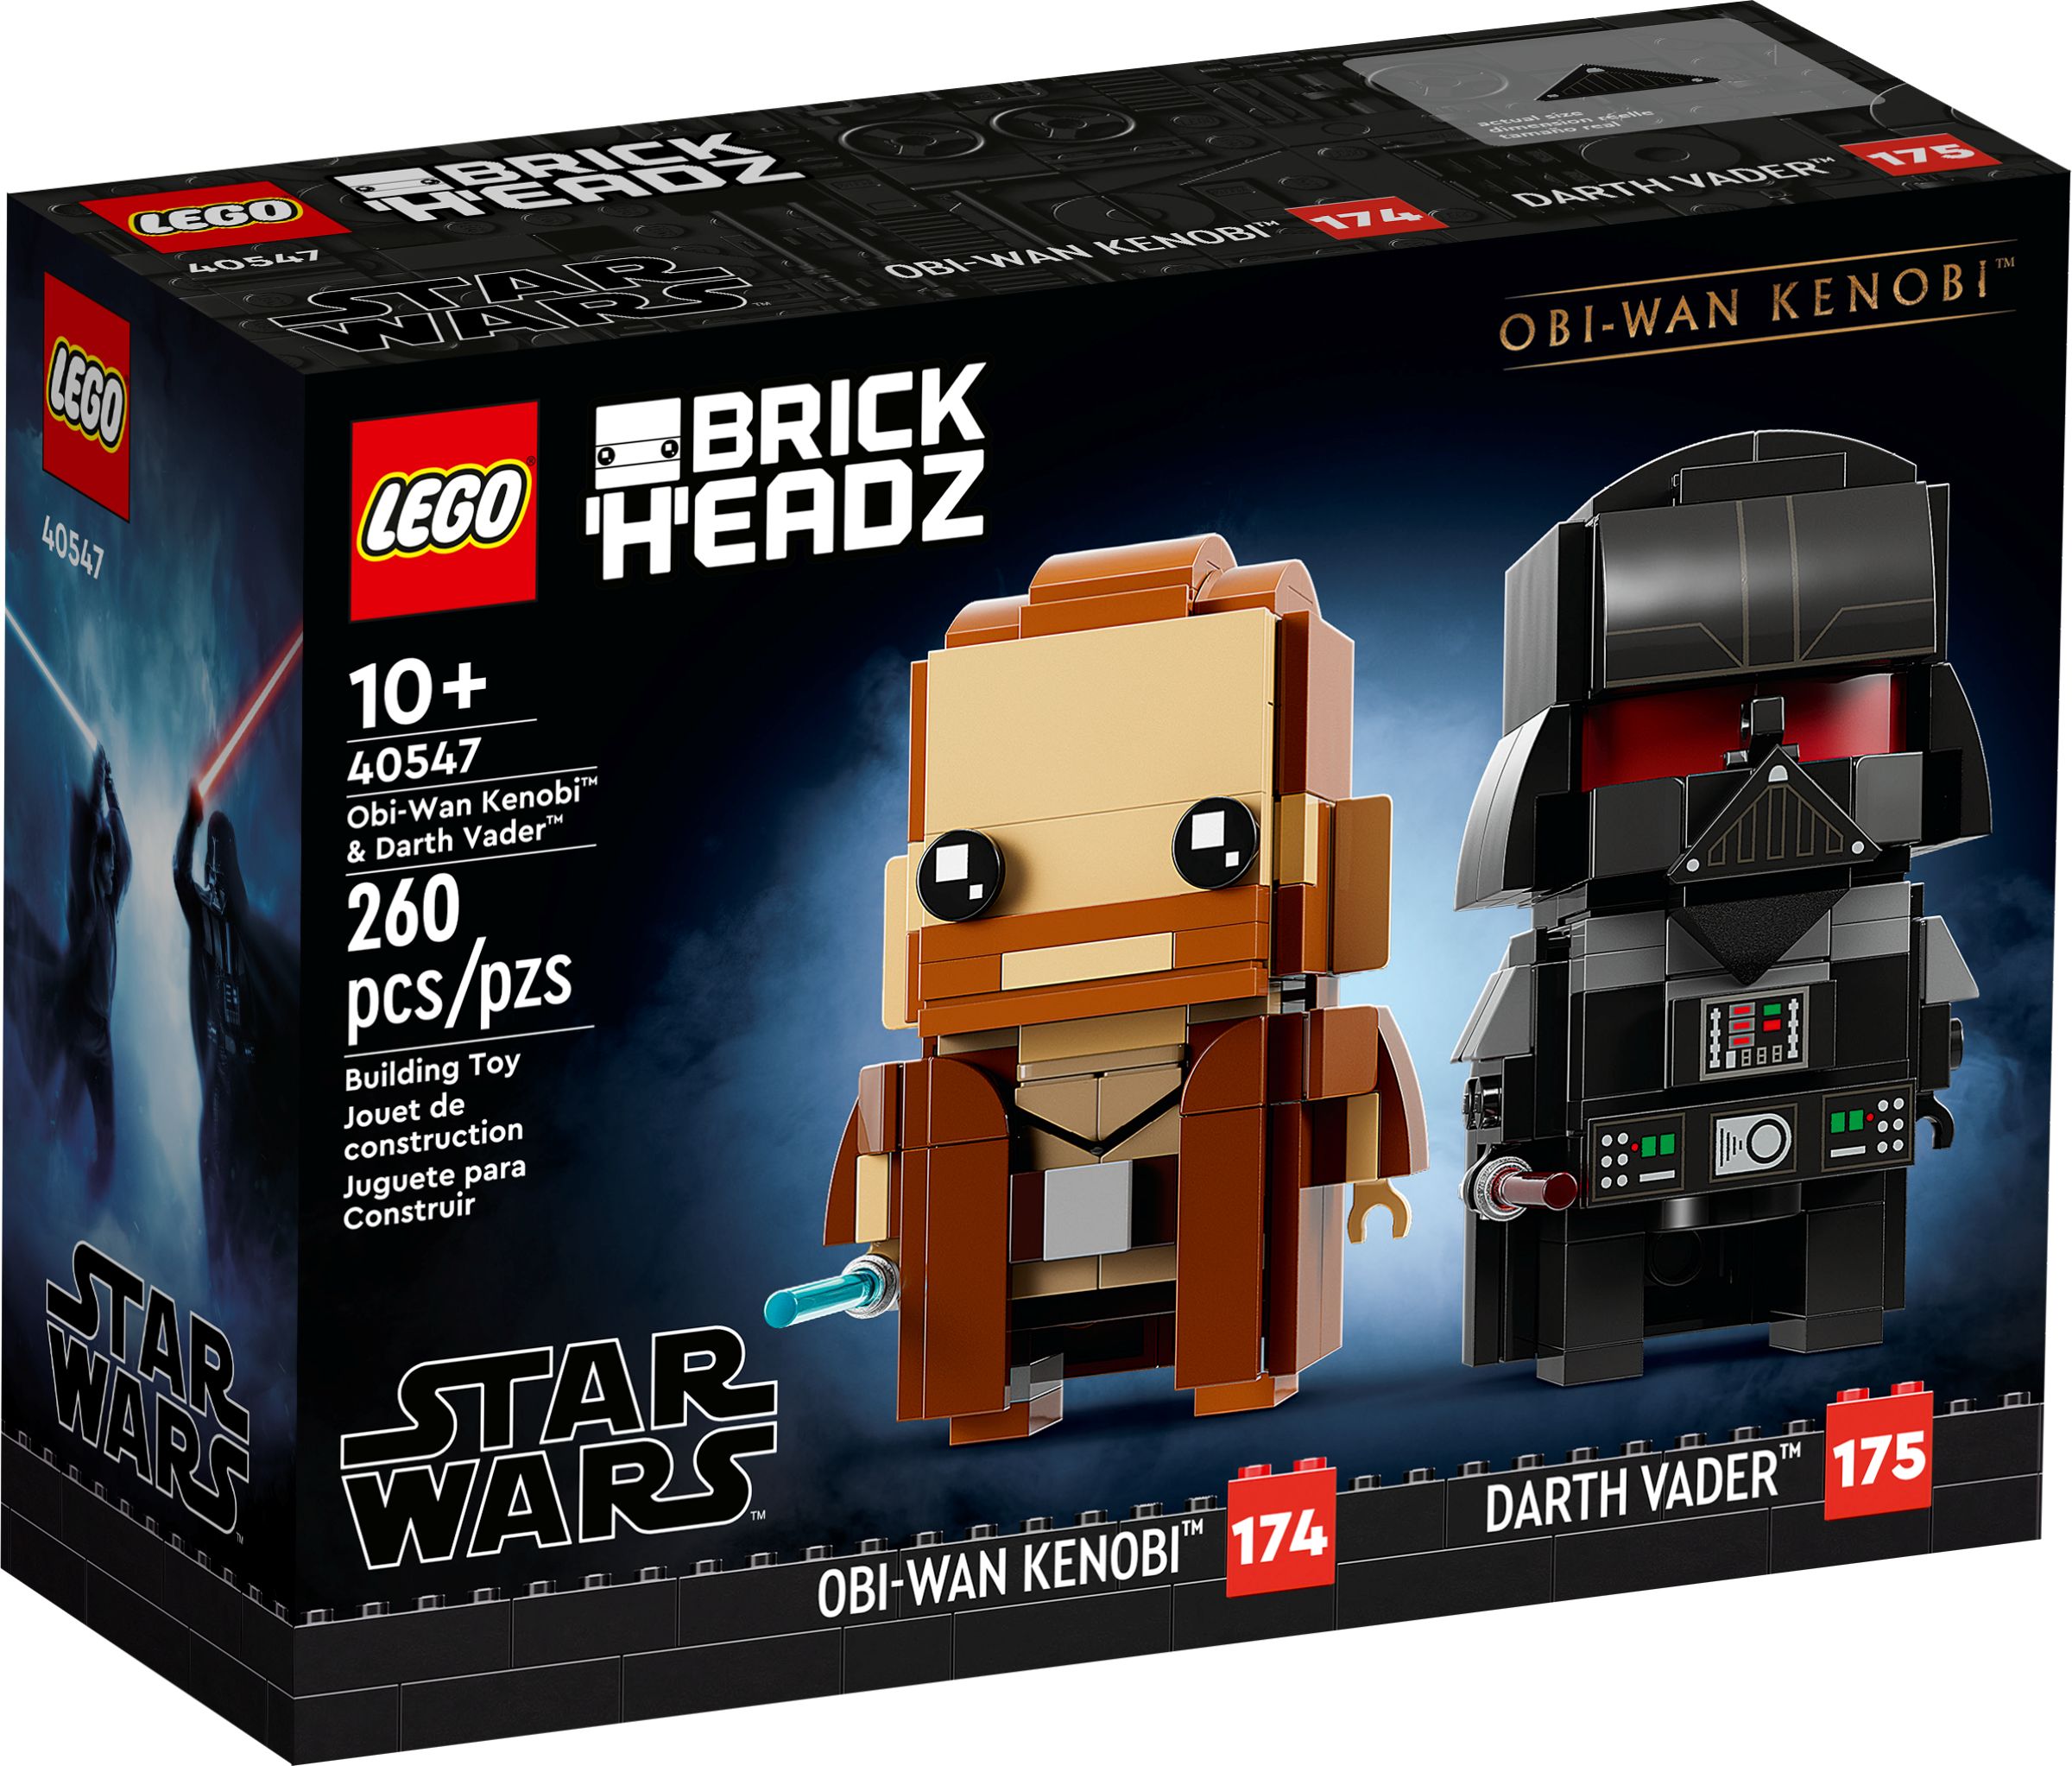 LEGO BrickHeadz 40547 Obi-Wan Kenobi™ & Darth Vader™ LEGO_40547_alt1.jpg